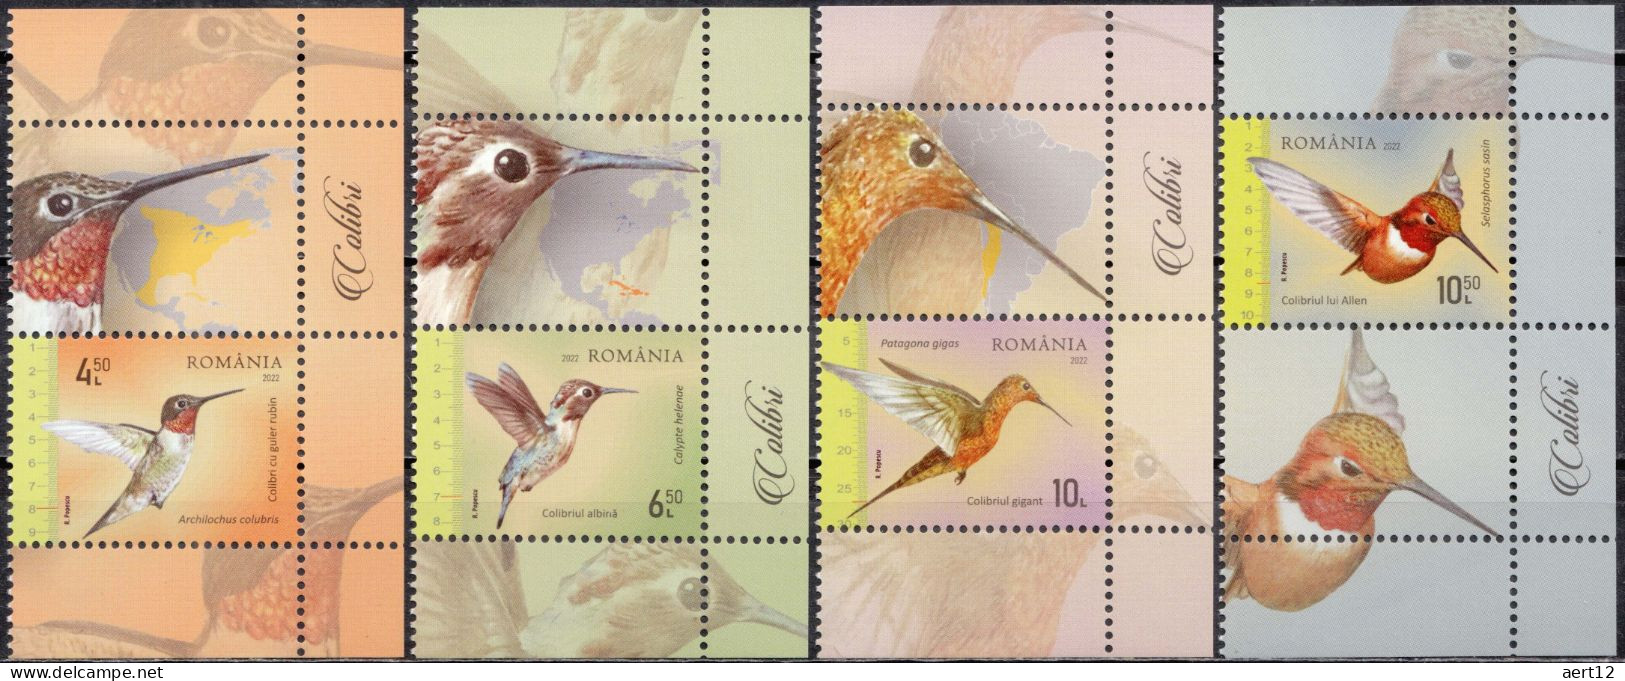 2022, Romania, Hummingbirds, Animals (Fauna), Birds, 4 Stamps+Label M2, MNH(**), LPMP 2379 - Unused Stamps